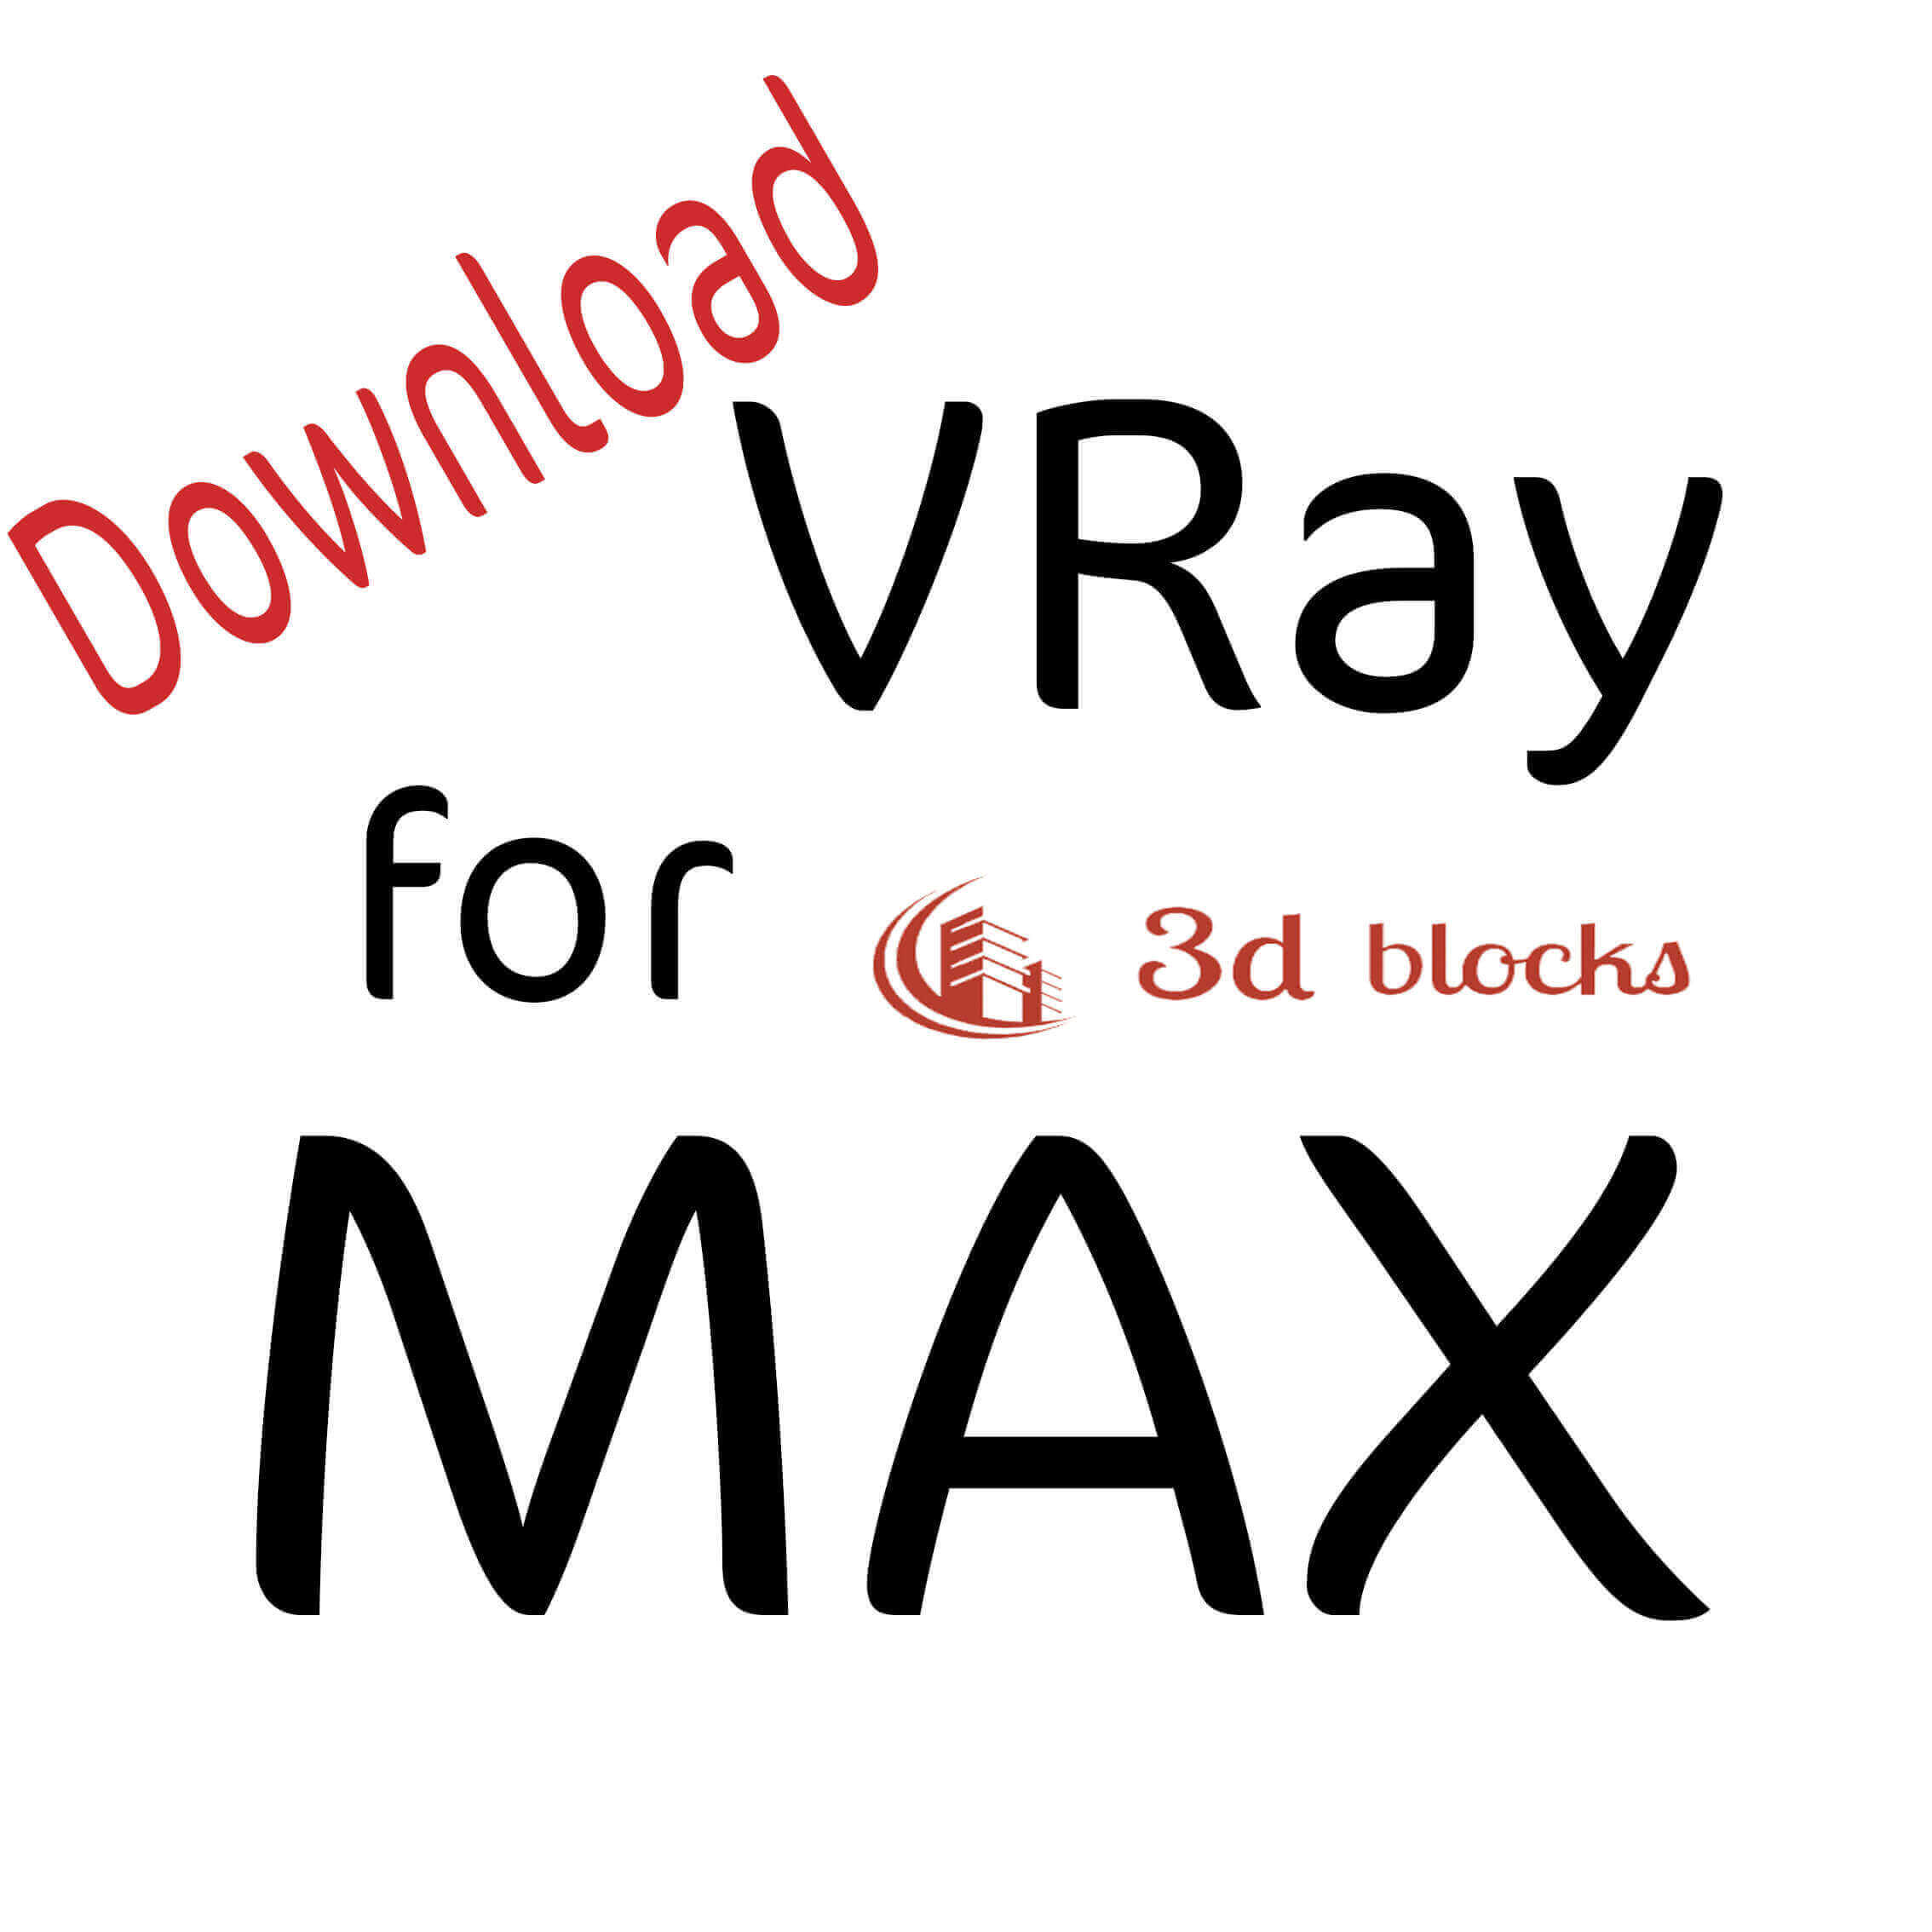 download vray 2.0 for 3d max 2010 64 bit full crack